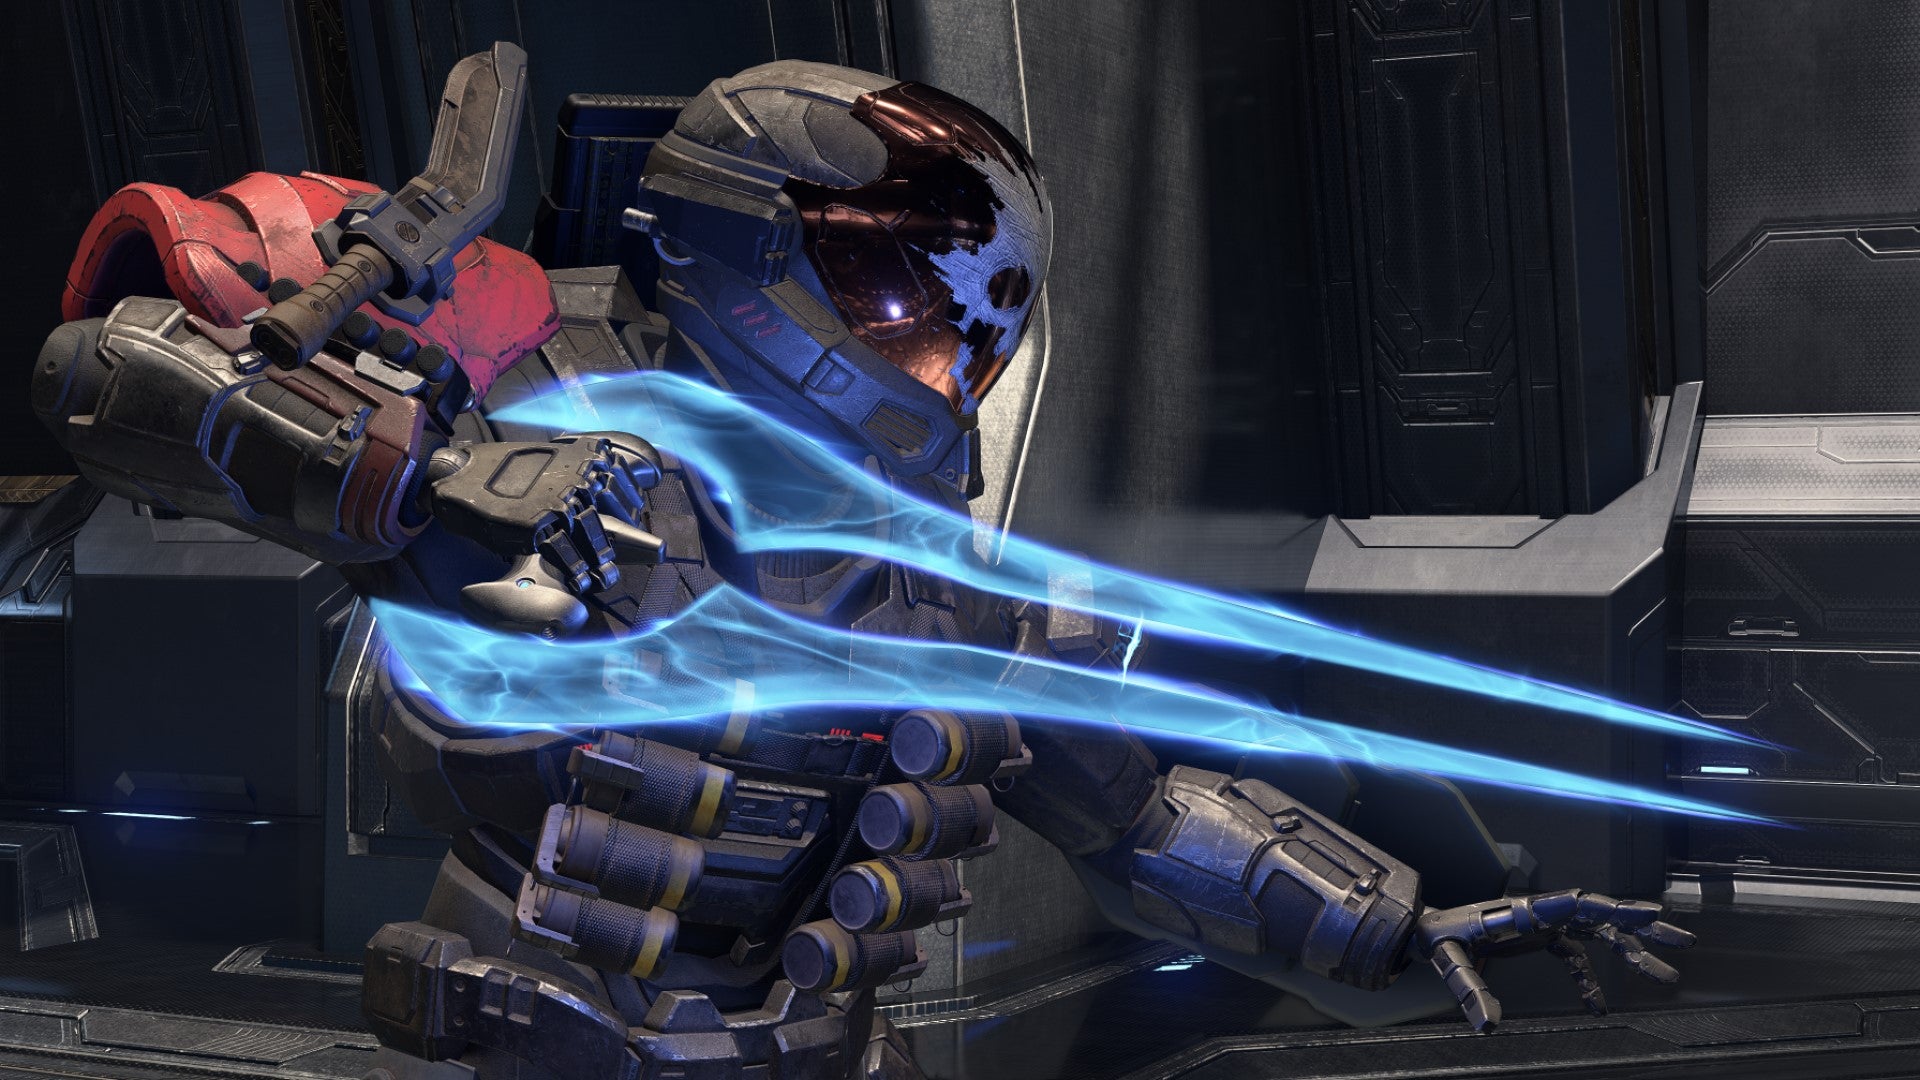 A Spartan raises their energy sword in Halo Infinite.